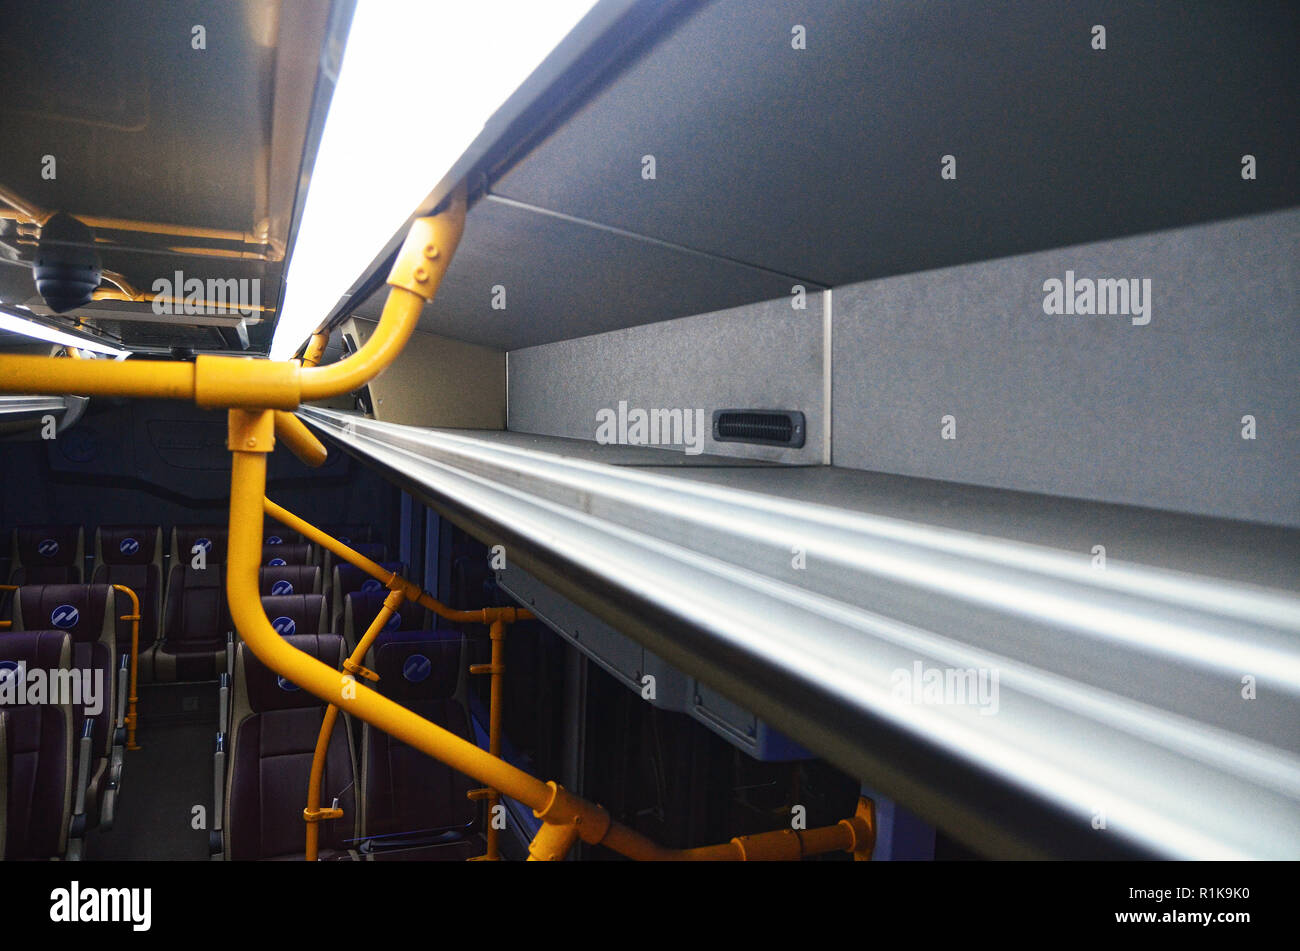 Overhead luggage rack of Royal Trans bus Stock Photo - Alamy